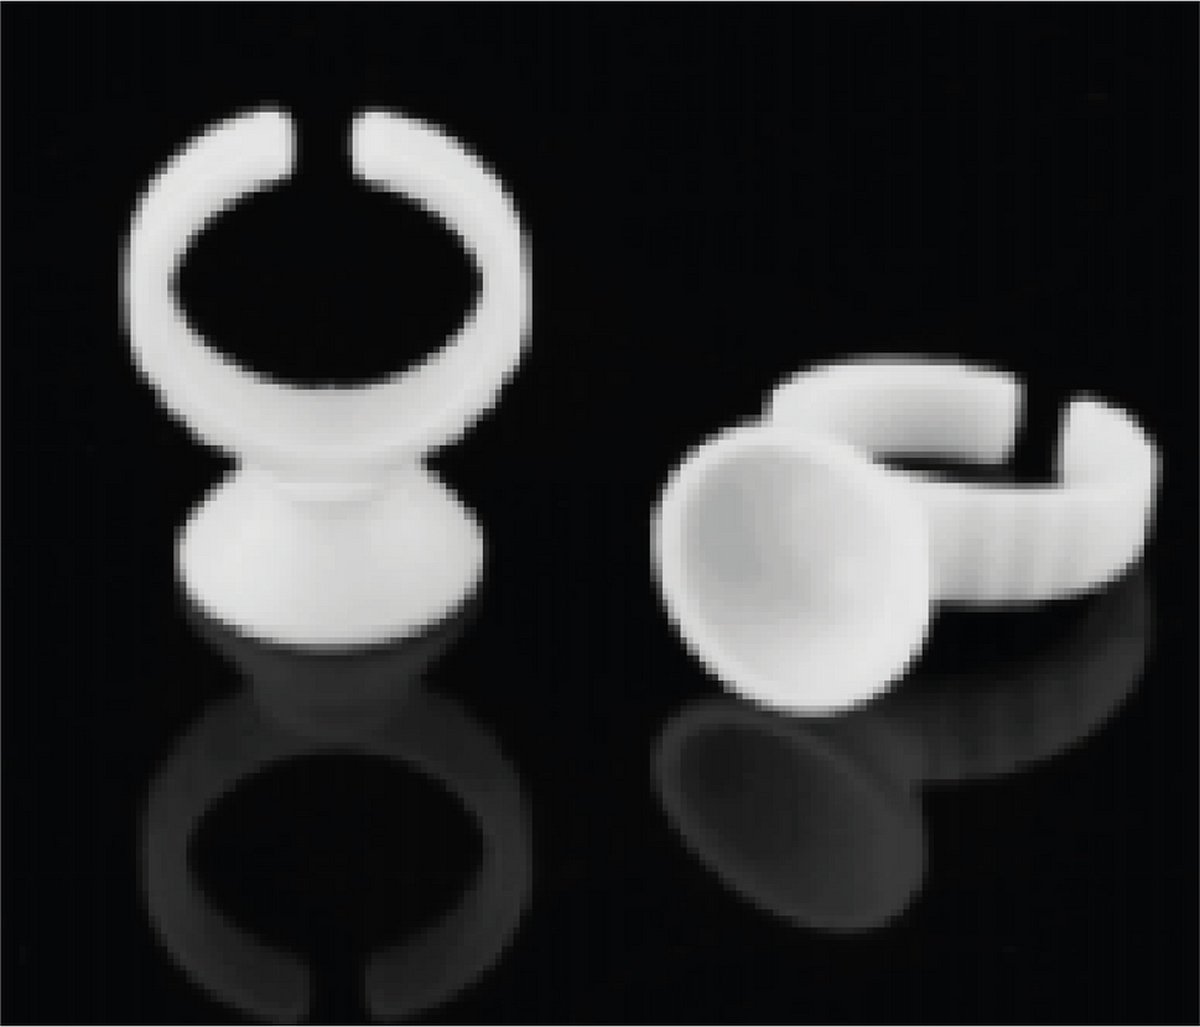 Pigmentcup ring (microblading) - PMU cup ring